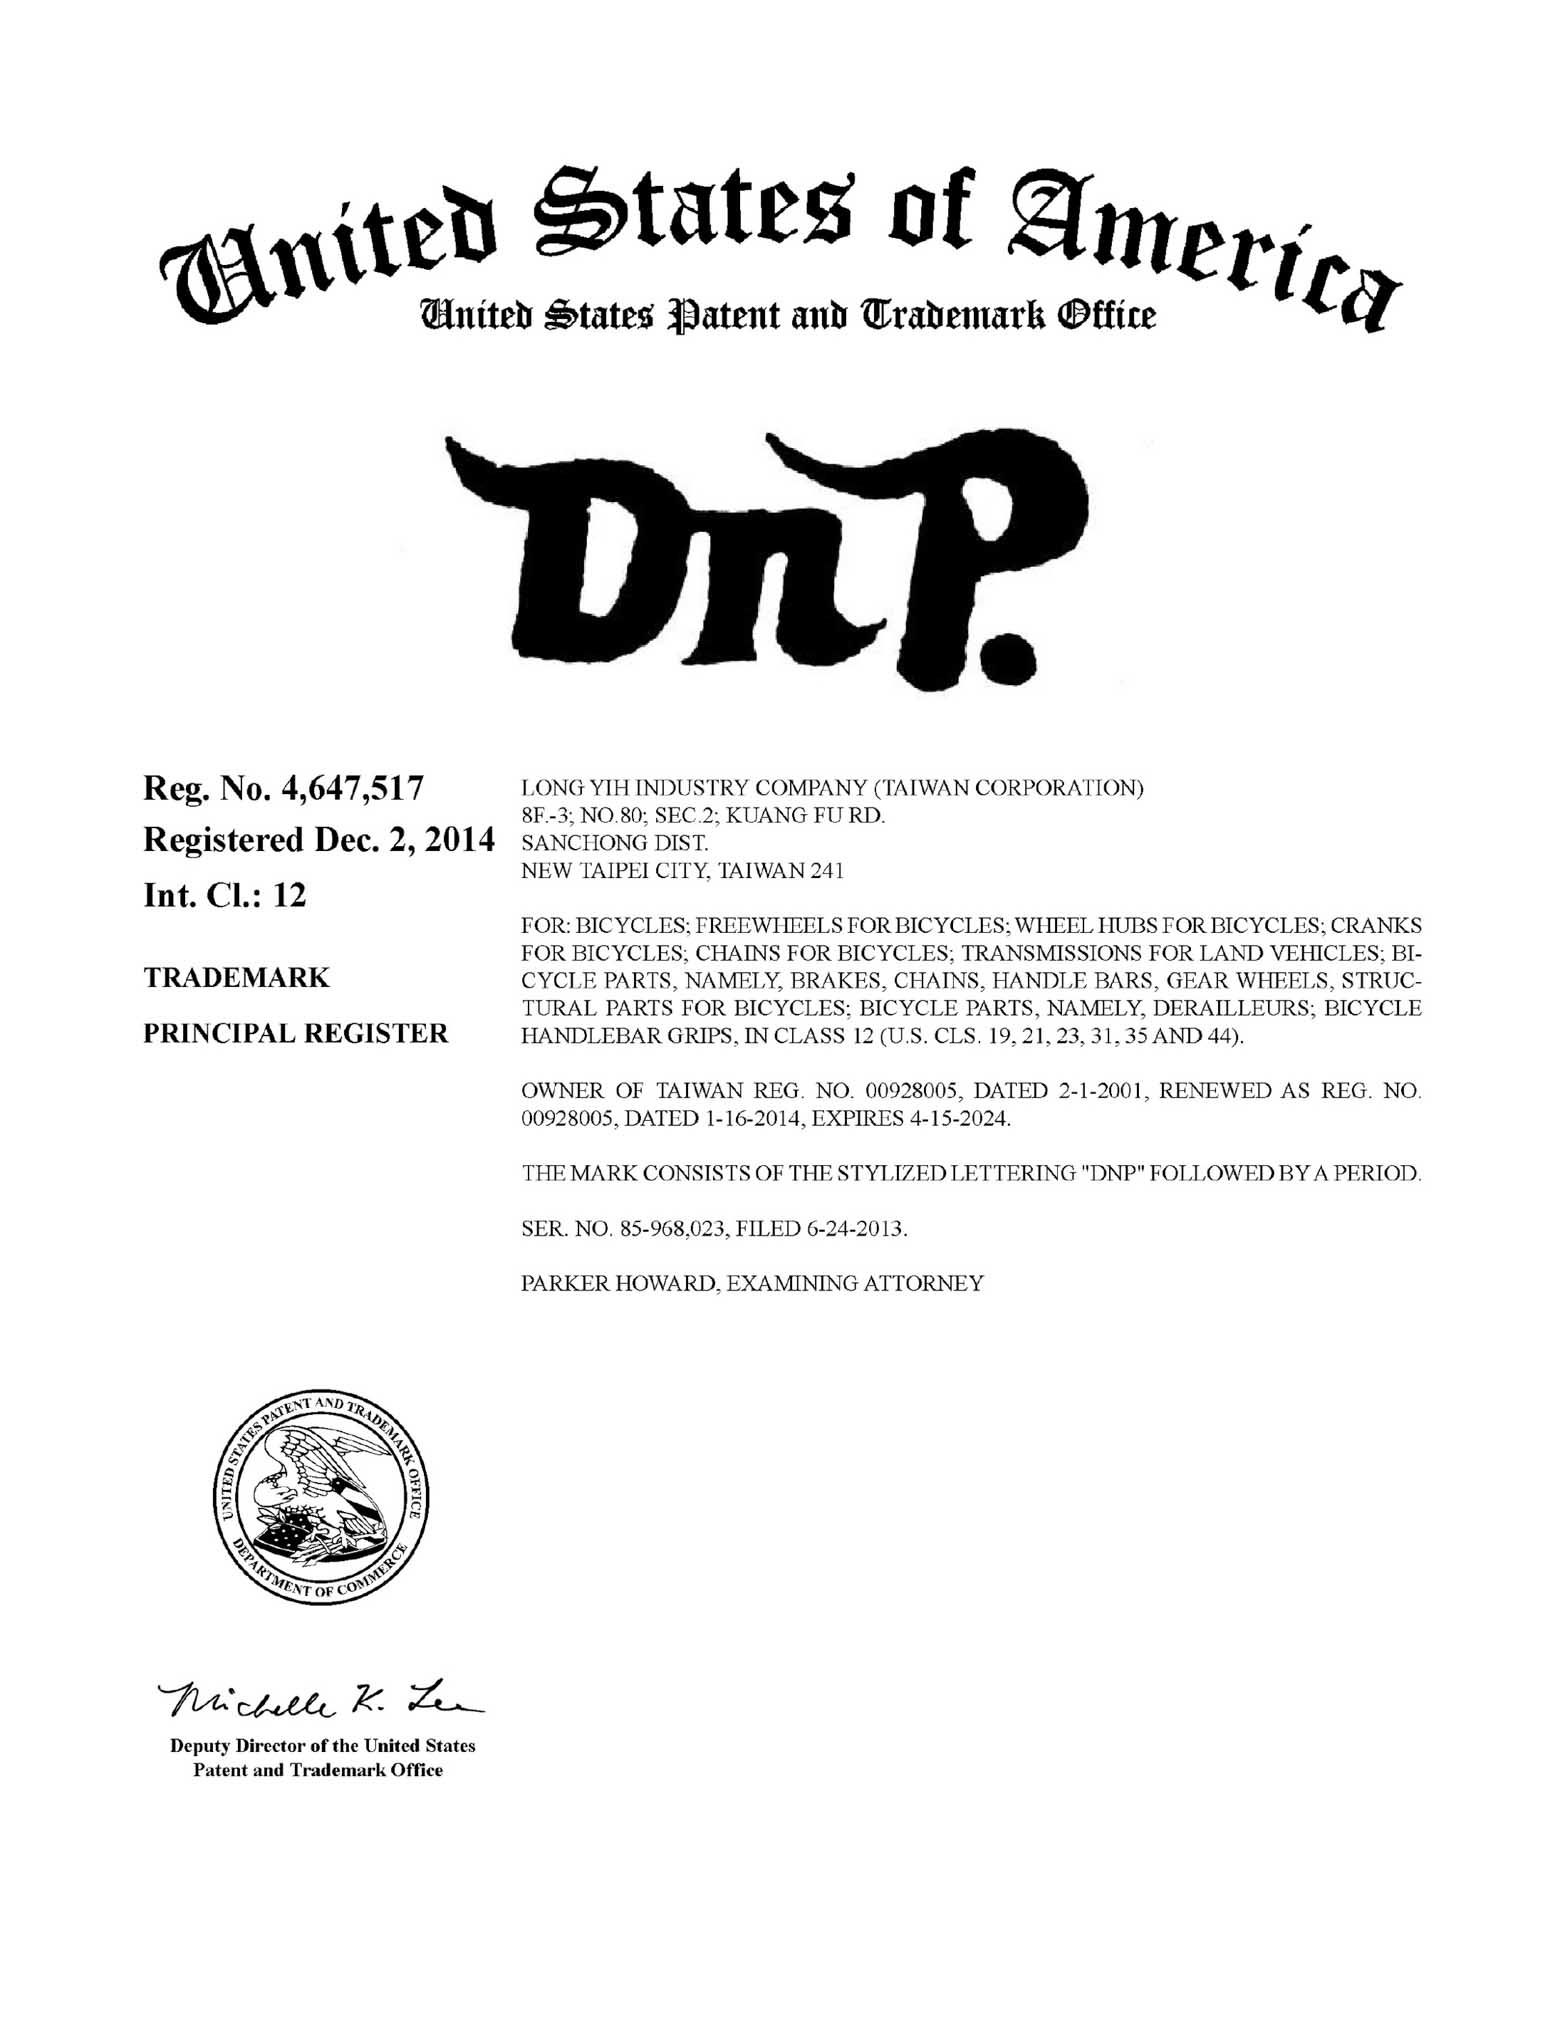 US Trademark 4,647,517 - DNP main image